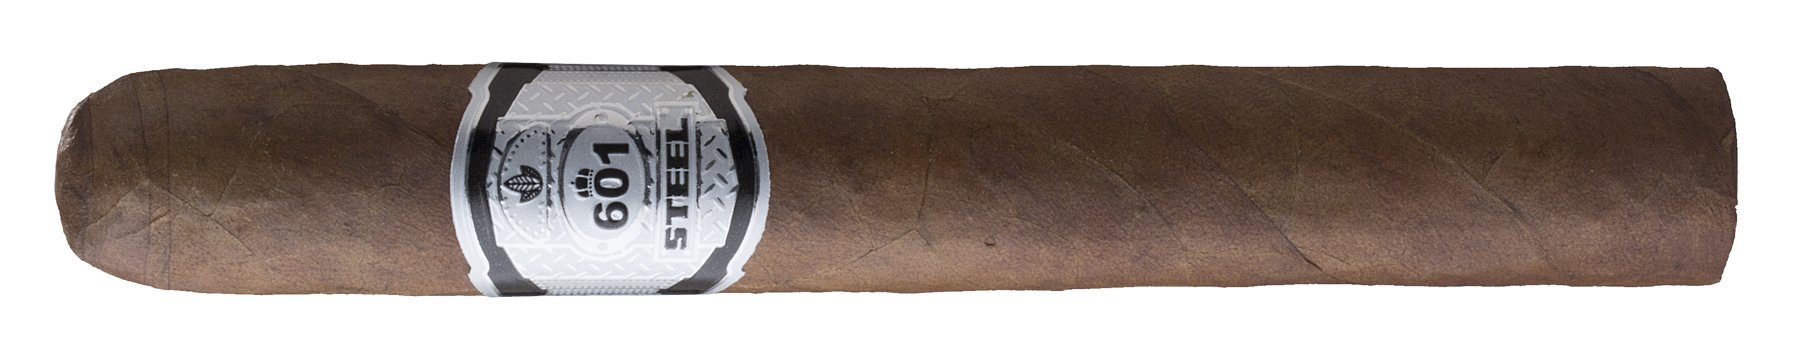 Espinosa 601 Steel single cigar-horizonta